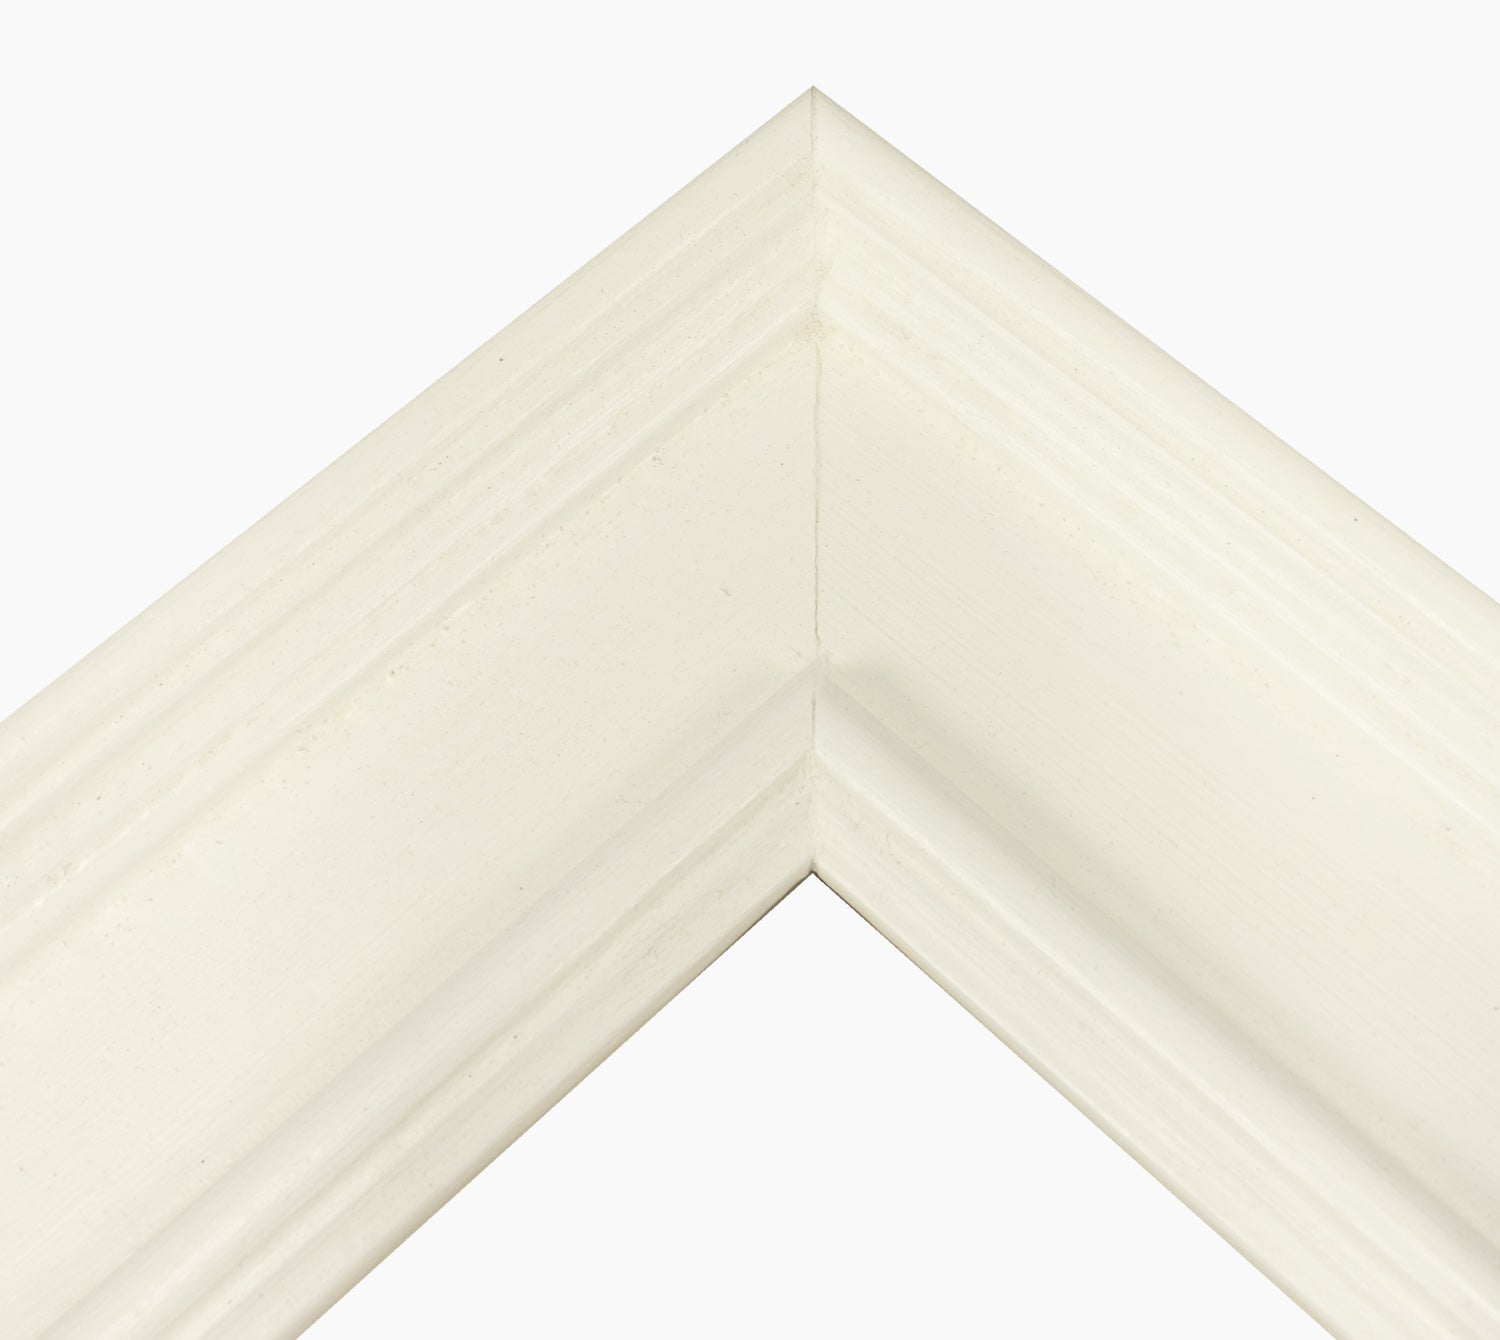 740.899 cadre en bois blanc avec de la cire mesure de profil 100x50 mm Lombarda cornici S.n.c.